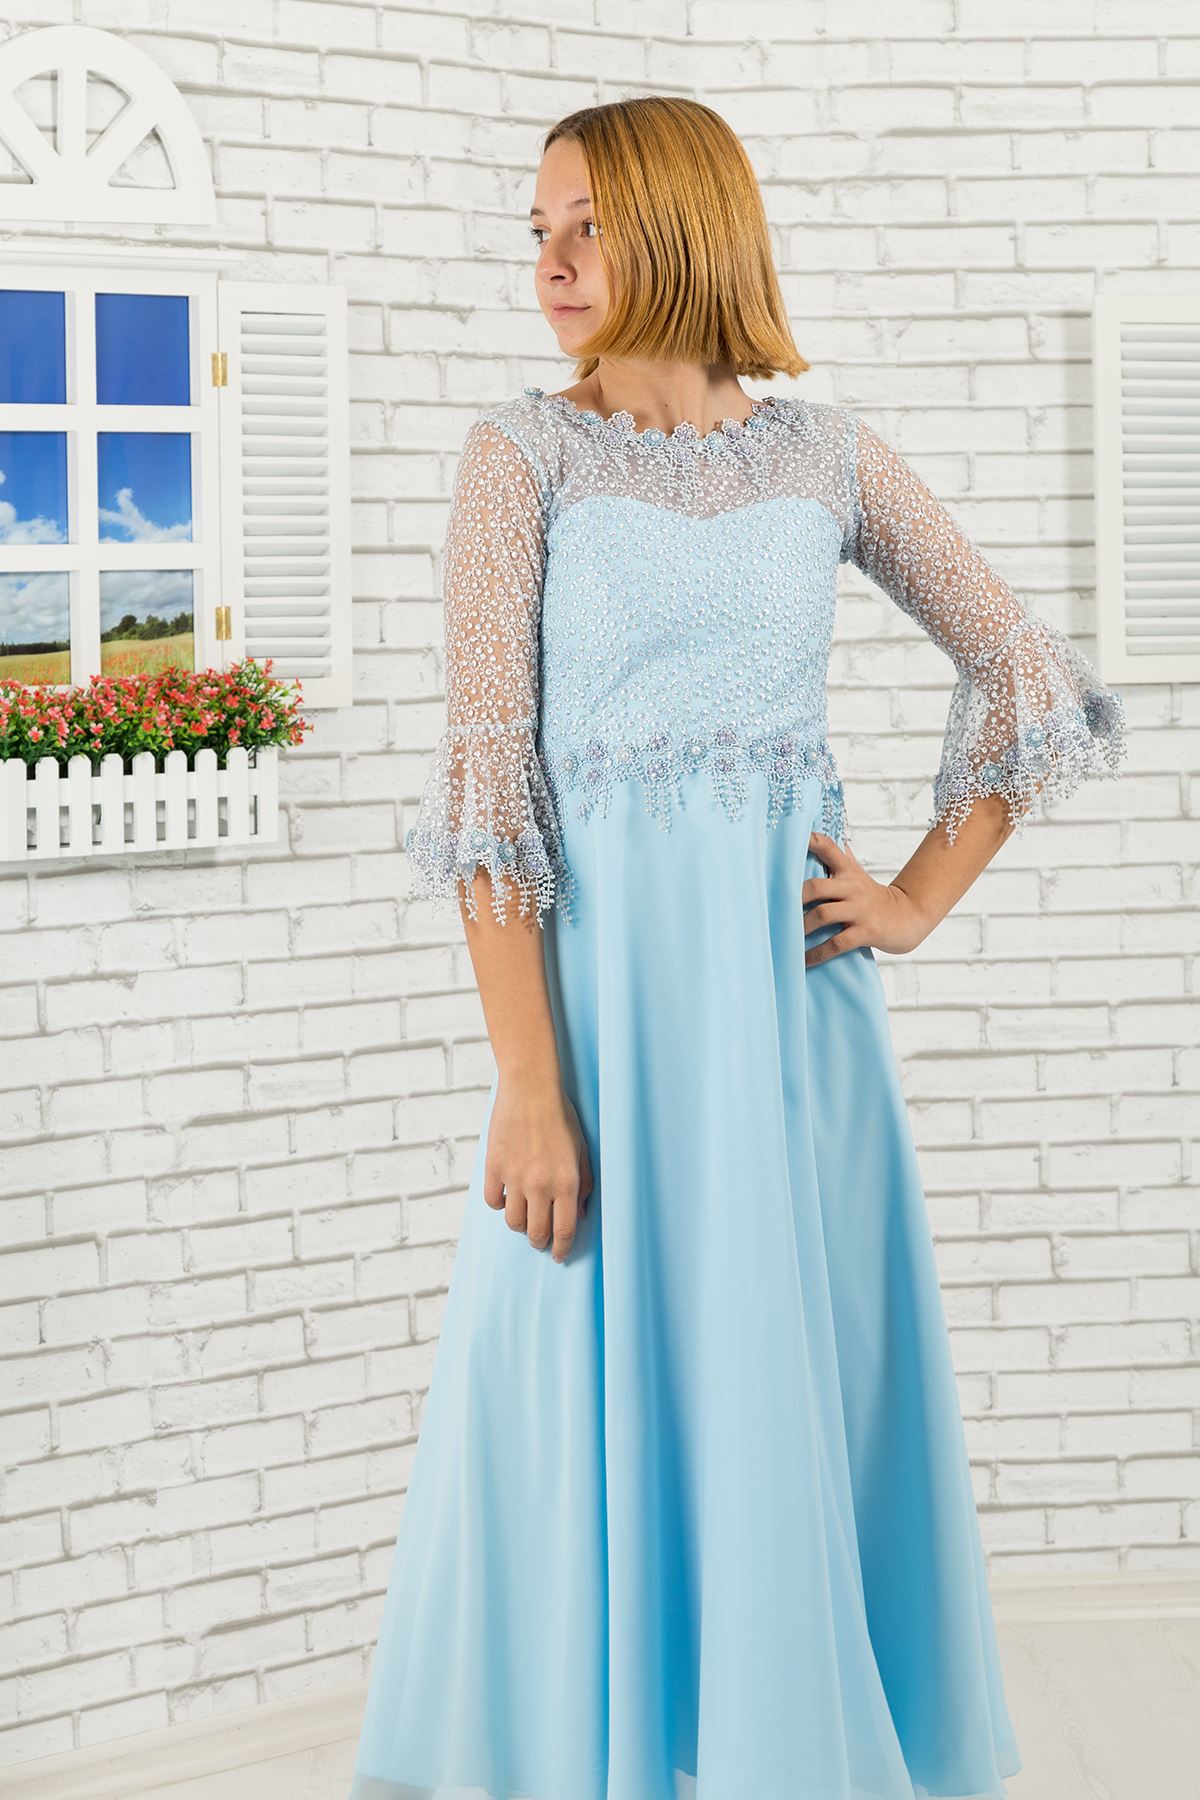 Lace Sleeve Detail, chiffon Girl Evening Dress 464 Light Blue